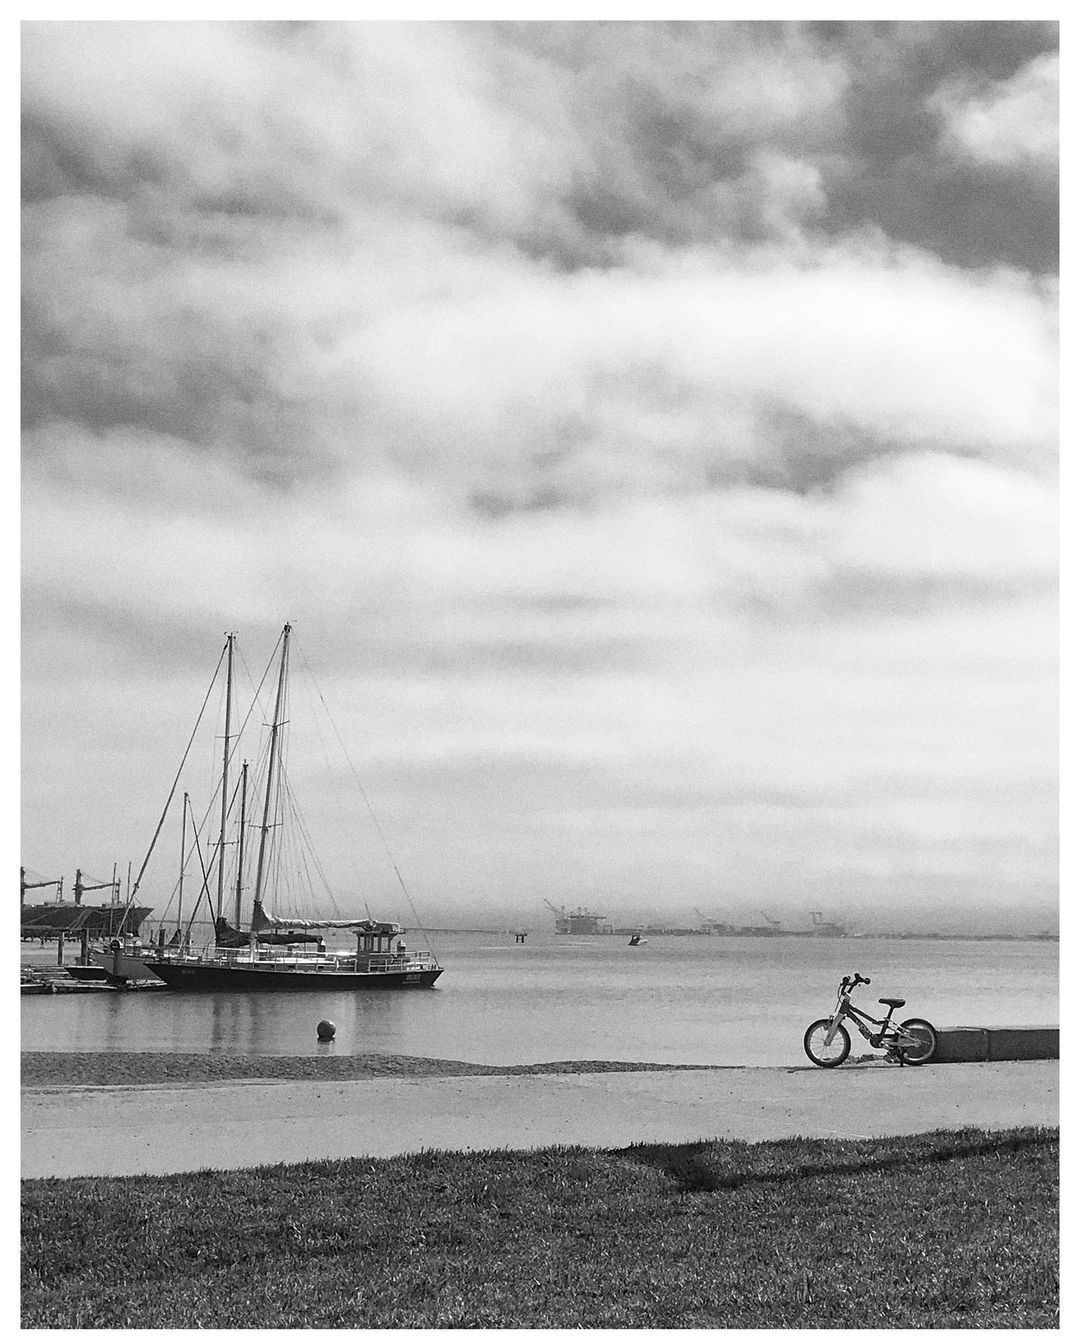 We have time to contemplate. #explore #connect #pause #blackandwhitephotography #sanfrancisco #ocean #cycling
https://www.instagram.com/p/CQmuPZenndJ/?utm_medium=tumblr